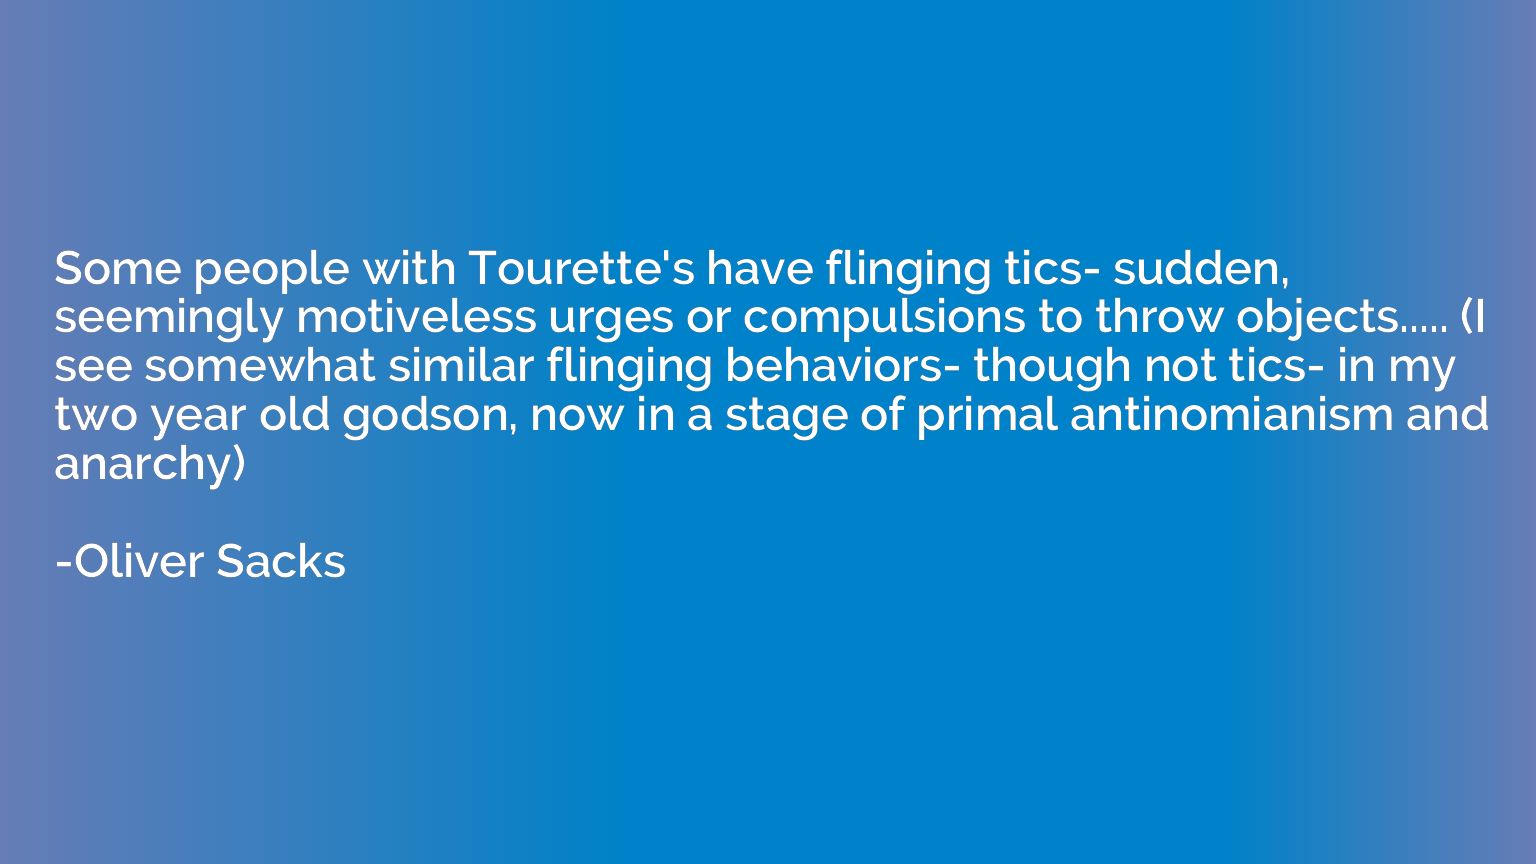 Some people with Tourette's have flinging tics- sudden, seem